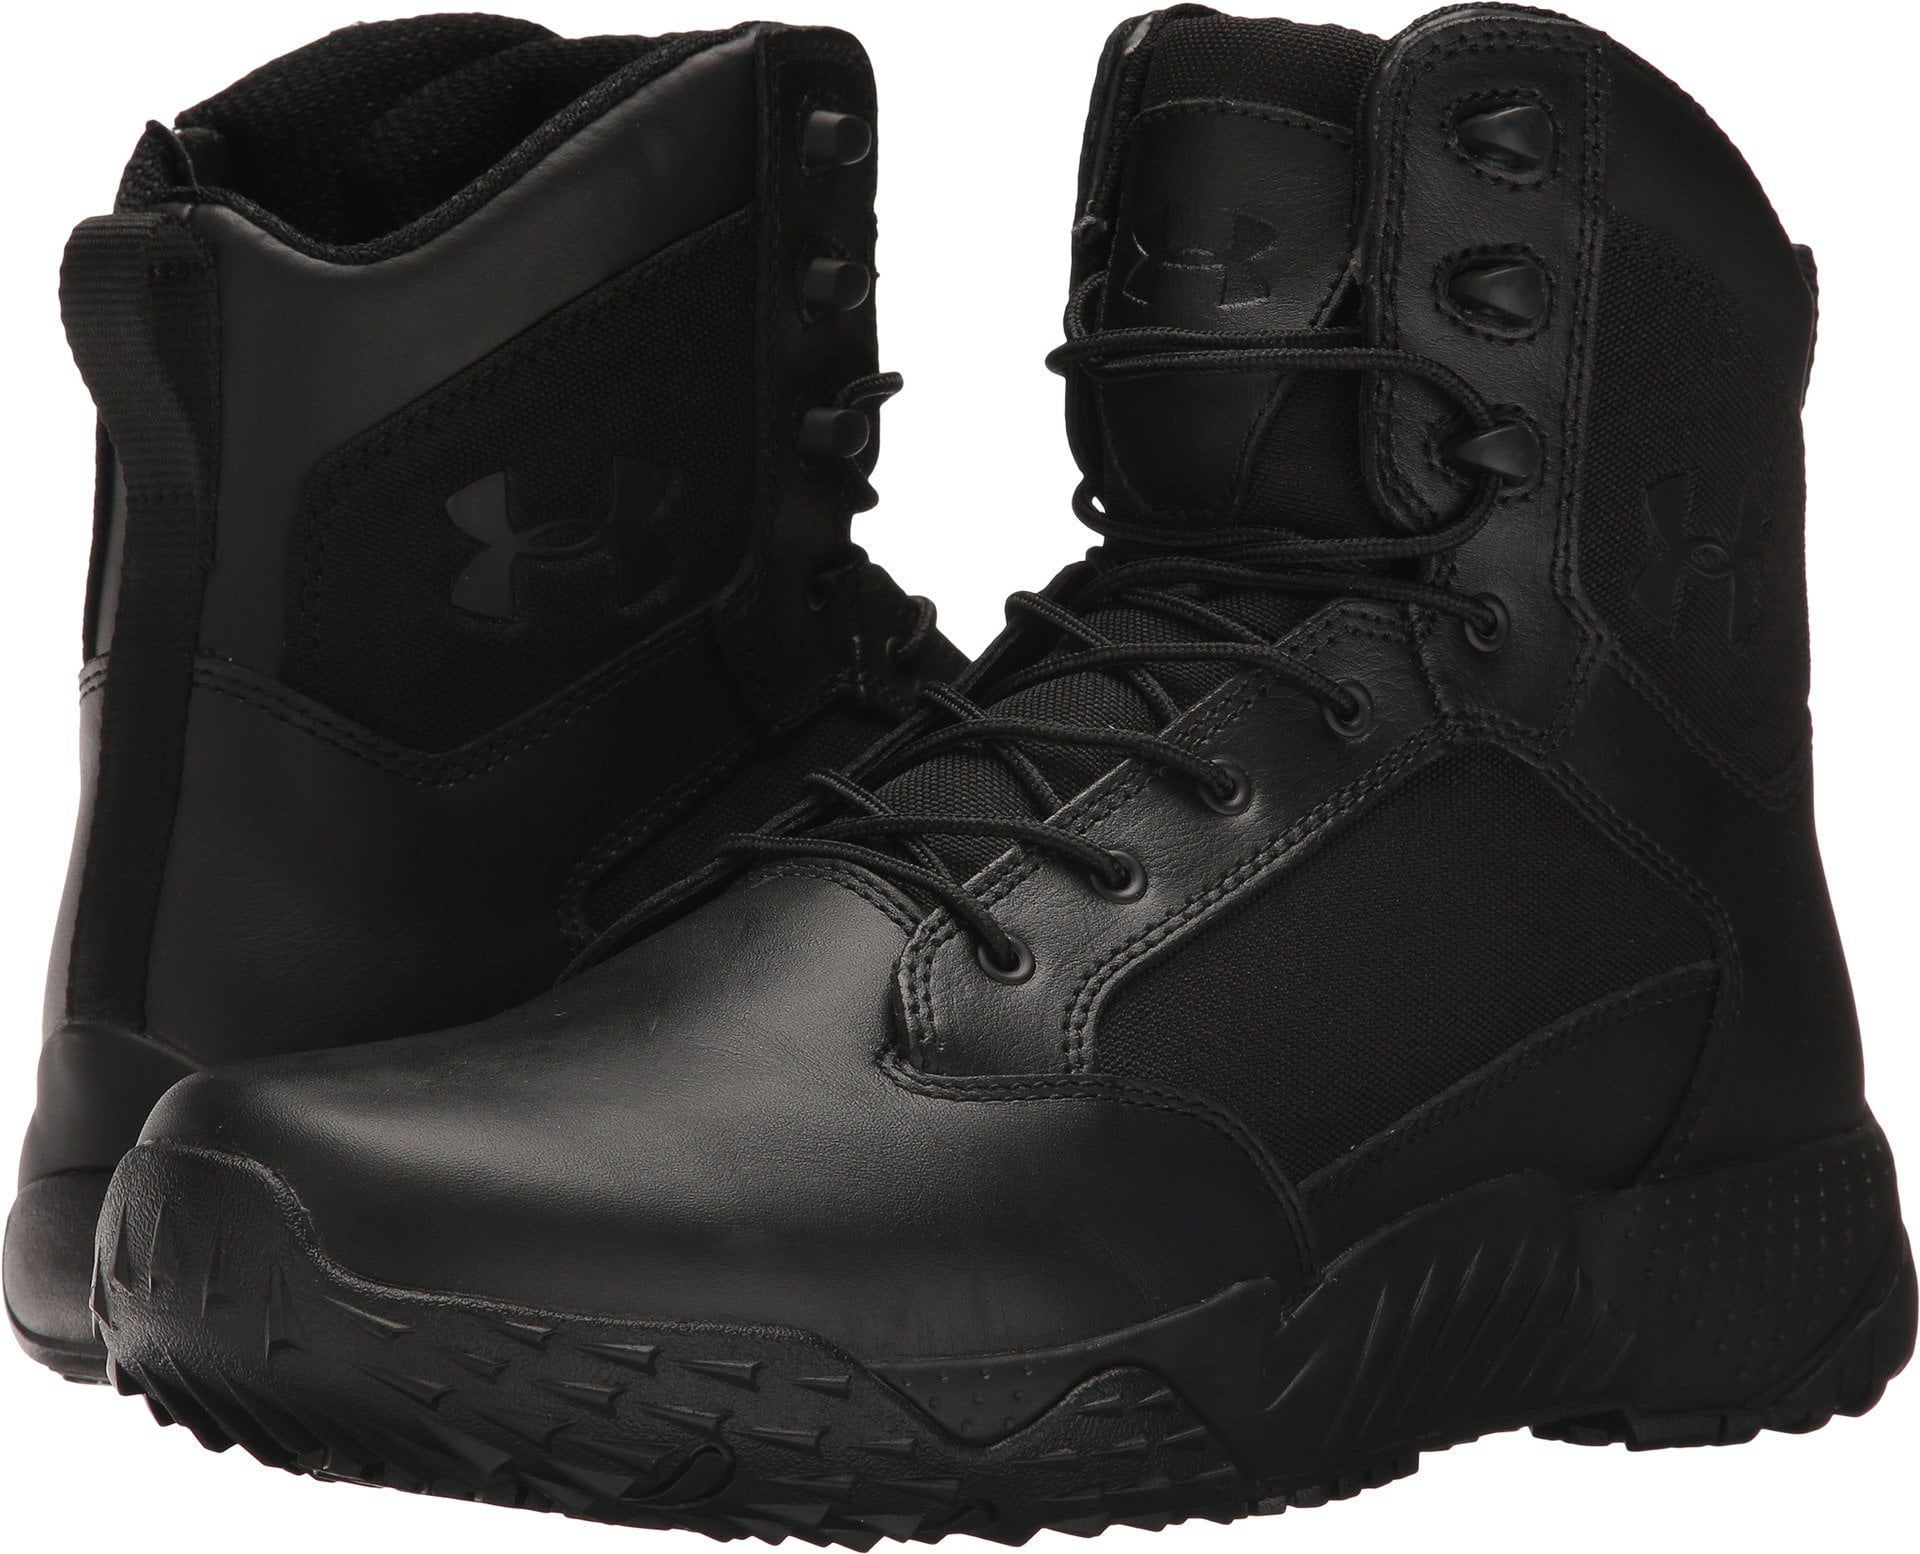 Buy Under Armour Men's Stellar Mid-Top Hiking Boot, Black (001